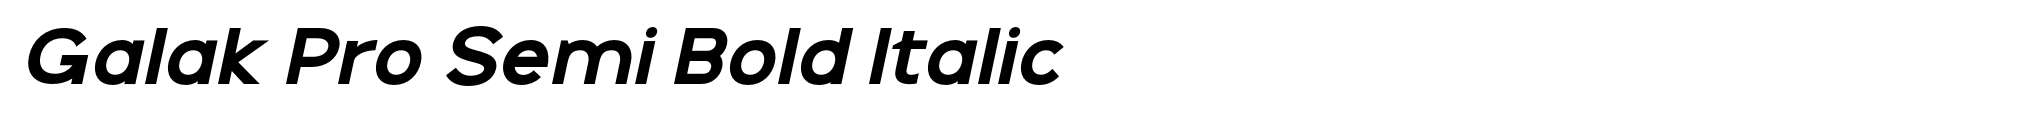 Galak Pro Semi Bold Italic image